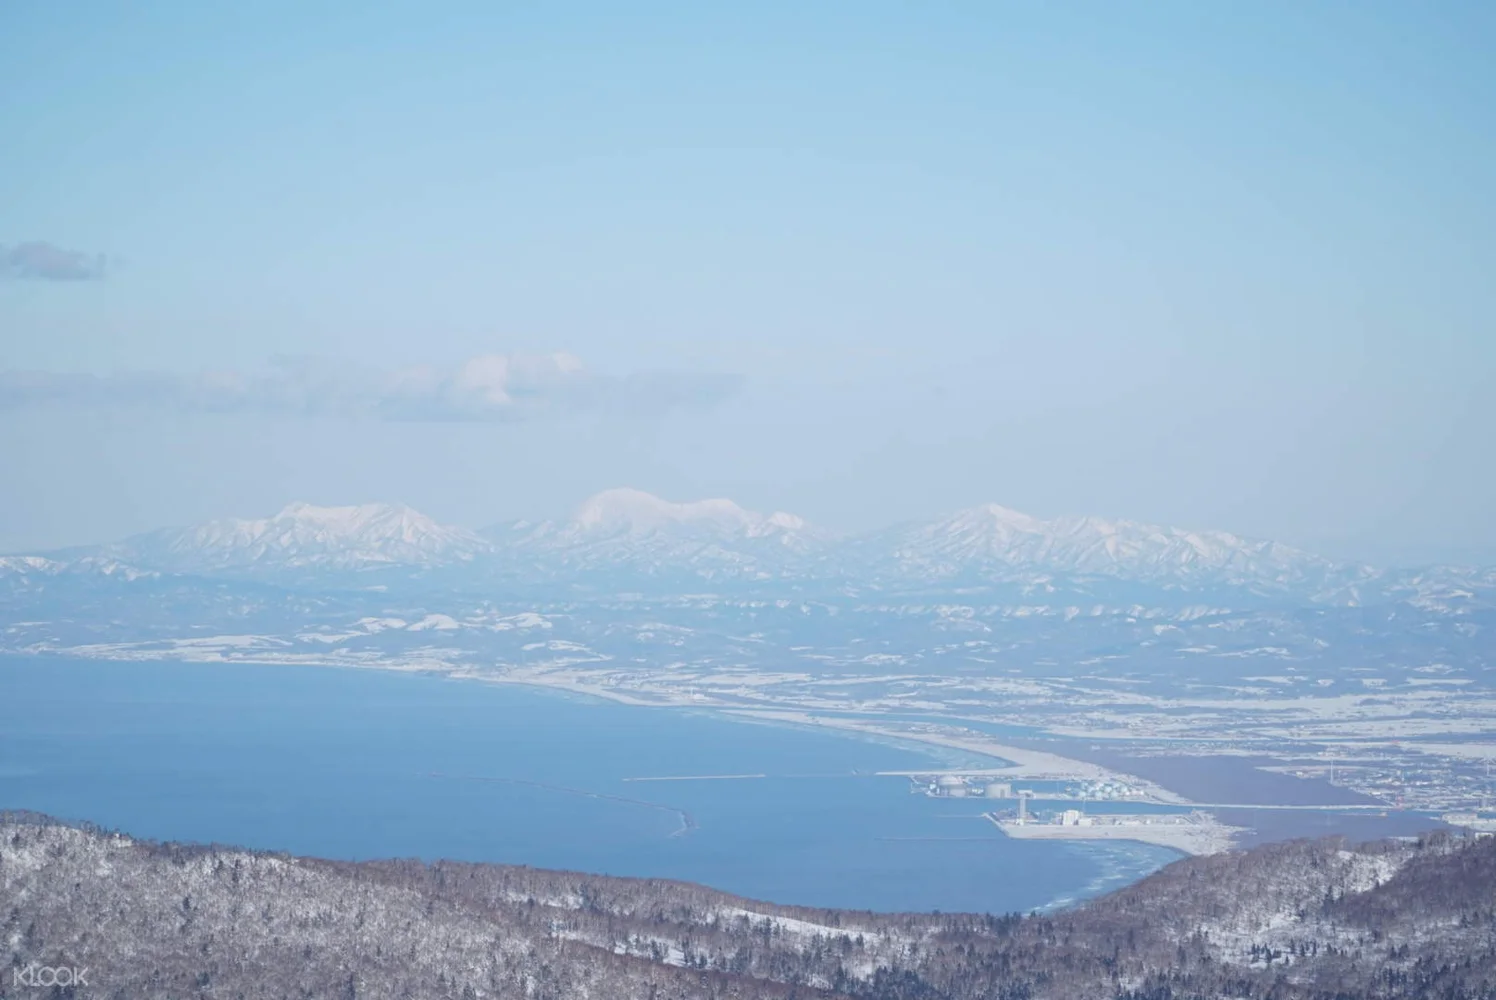 Sapporo Kokusai Ski Resort Packages: Lift Pass + Equipment Rental